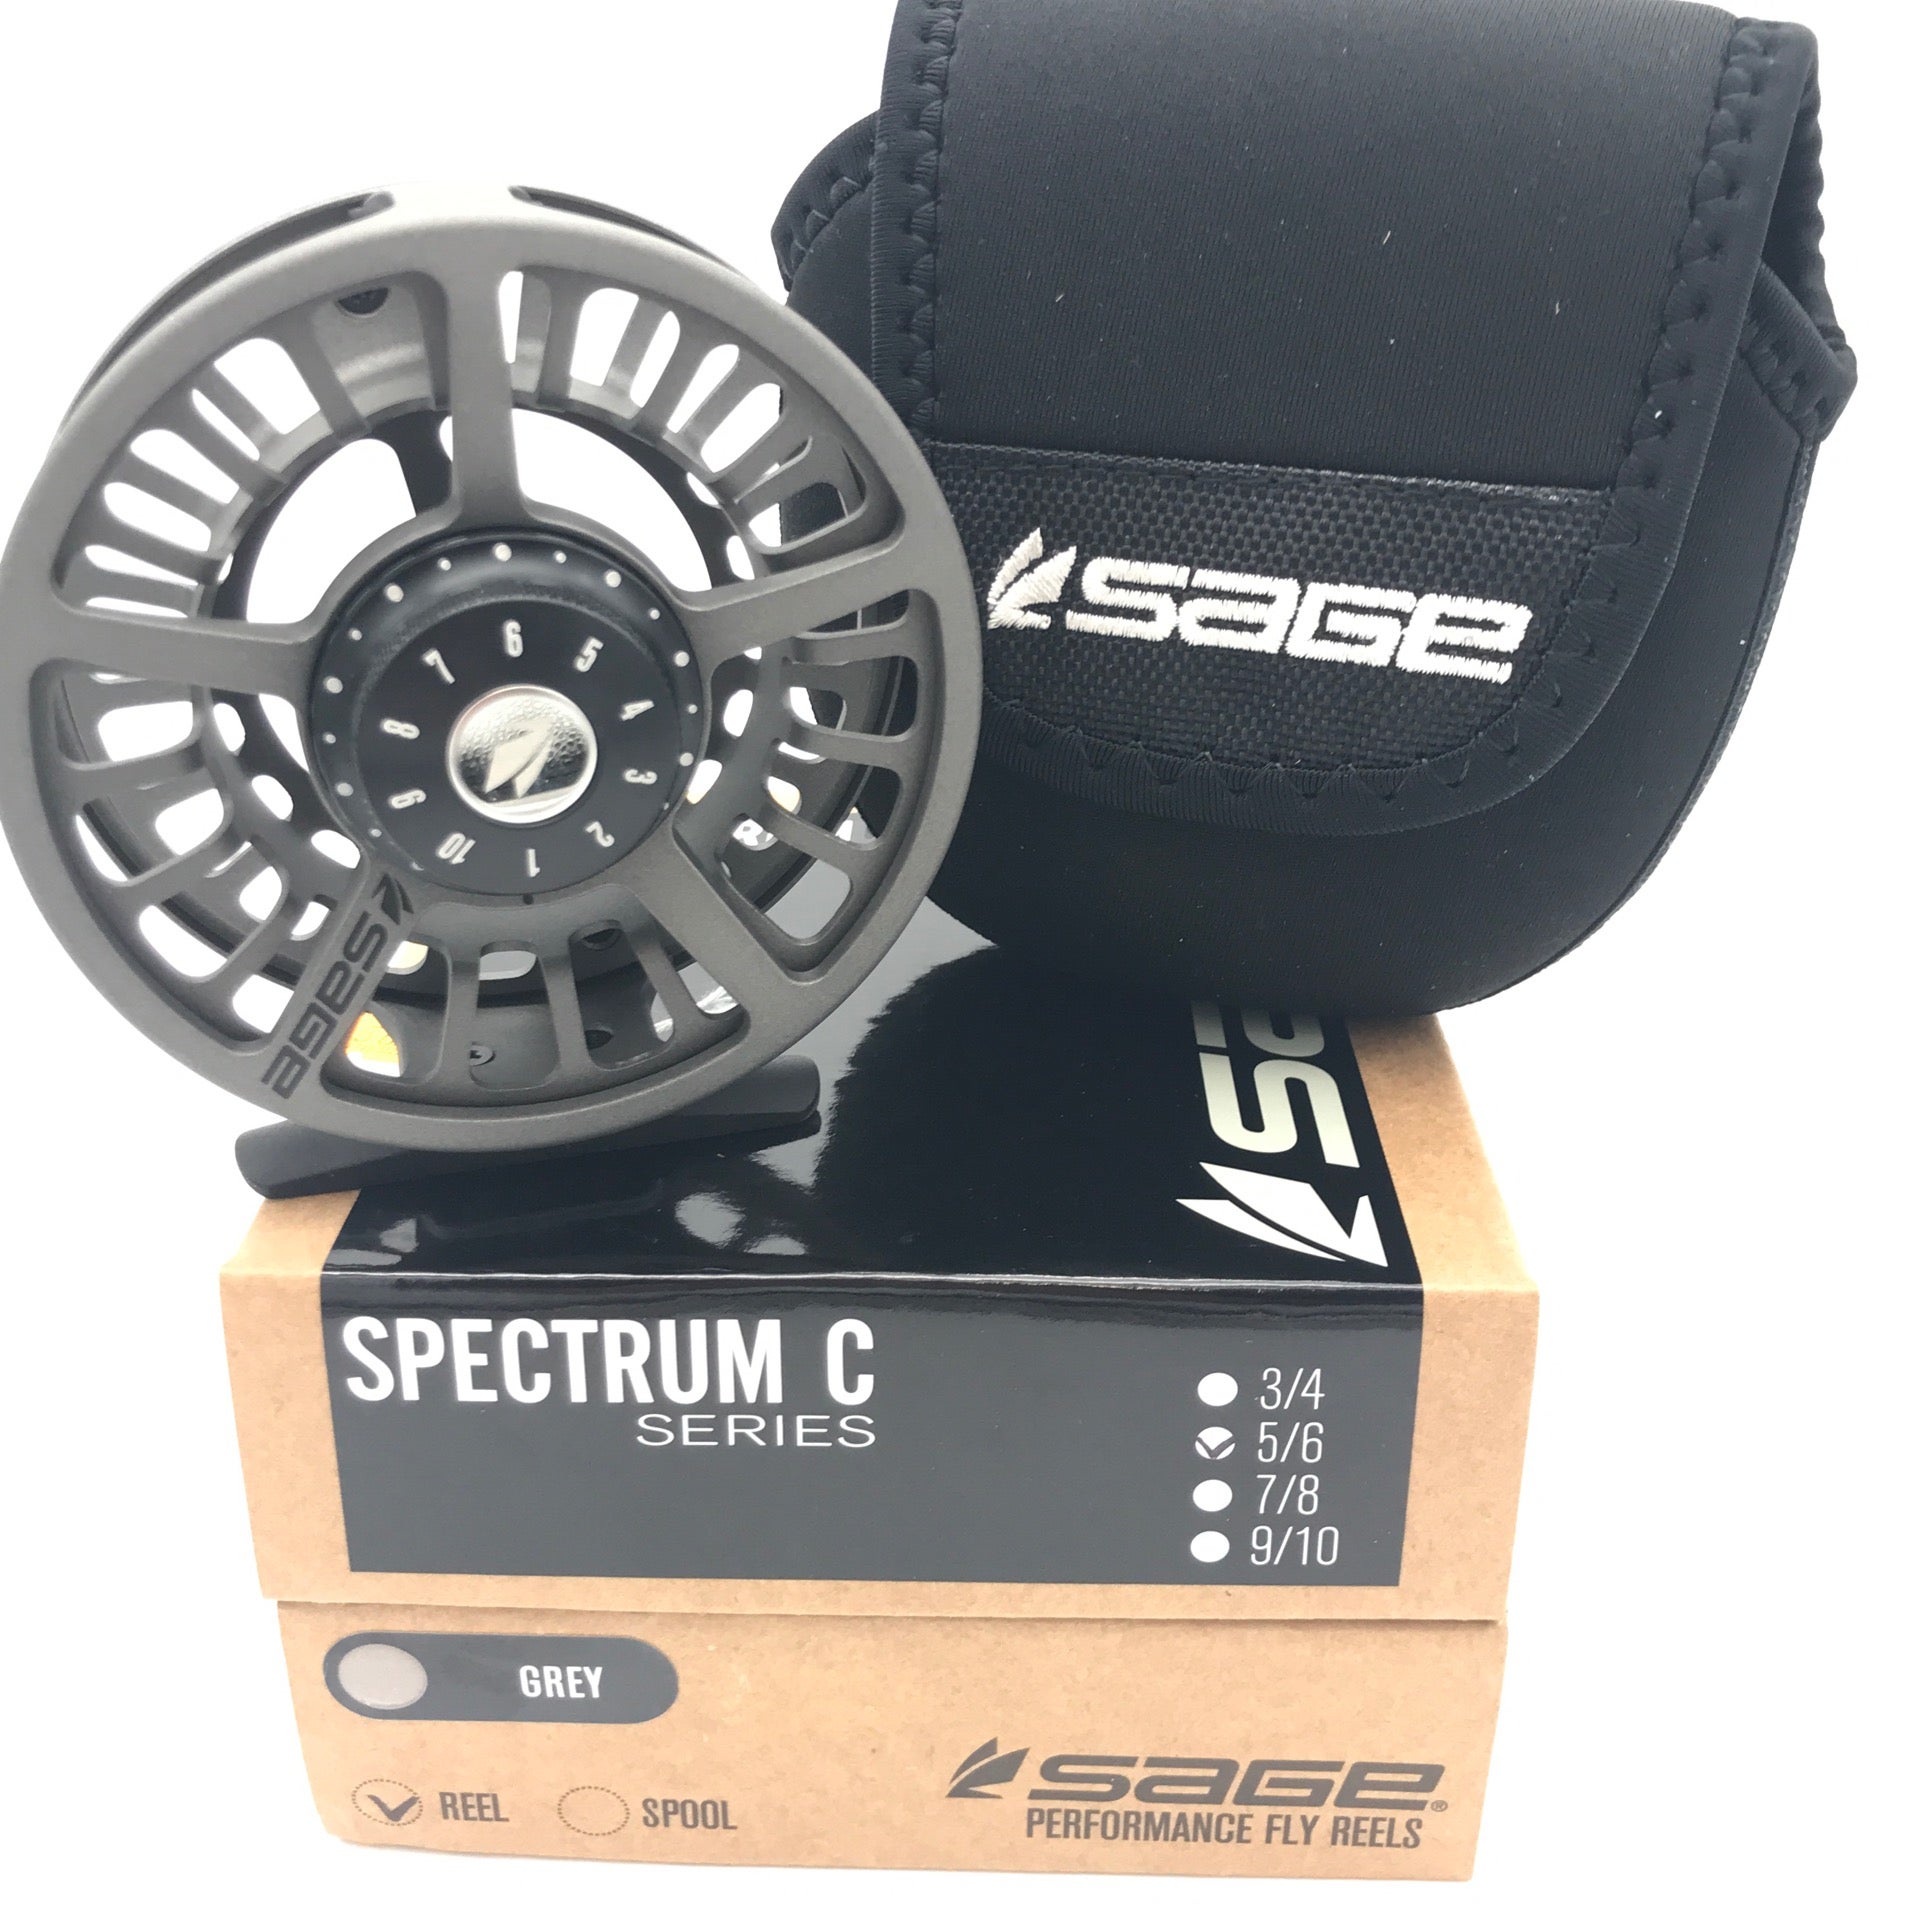 Sage Spectrum C 7/8 Fly Reel - Grey